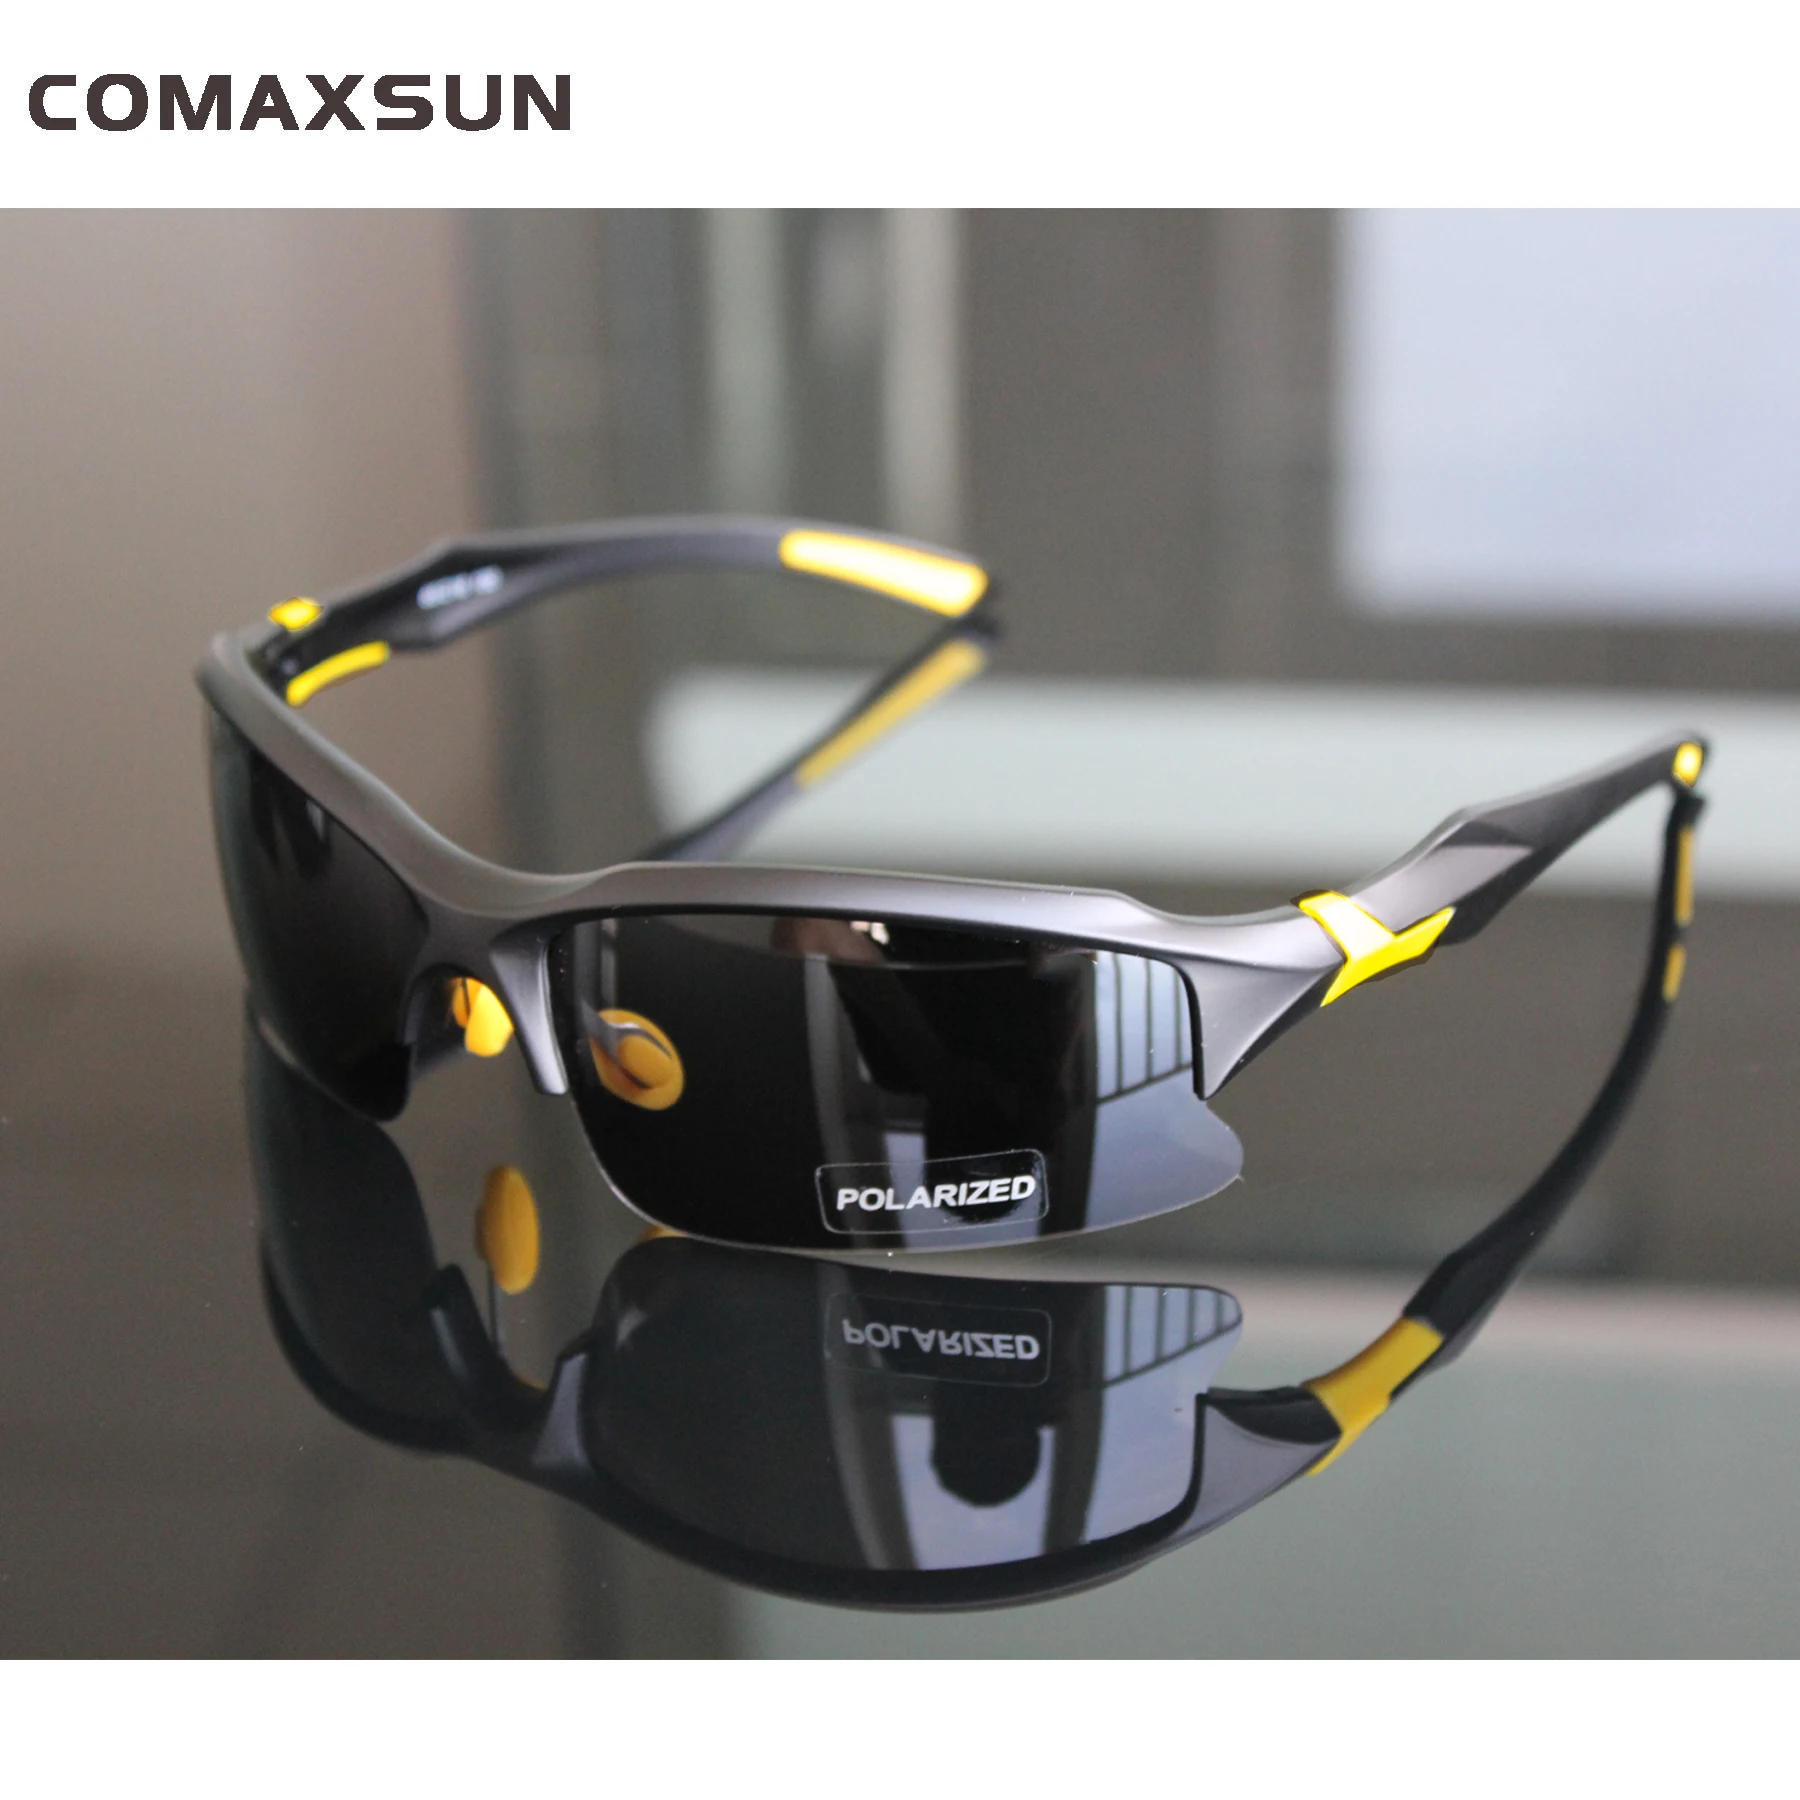 COMAXSUN Polarized Cycling Glasses Bike Goggles Driving Fishing Sunglasses UV400 